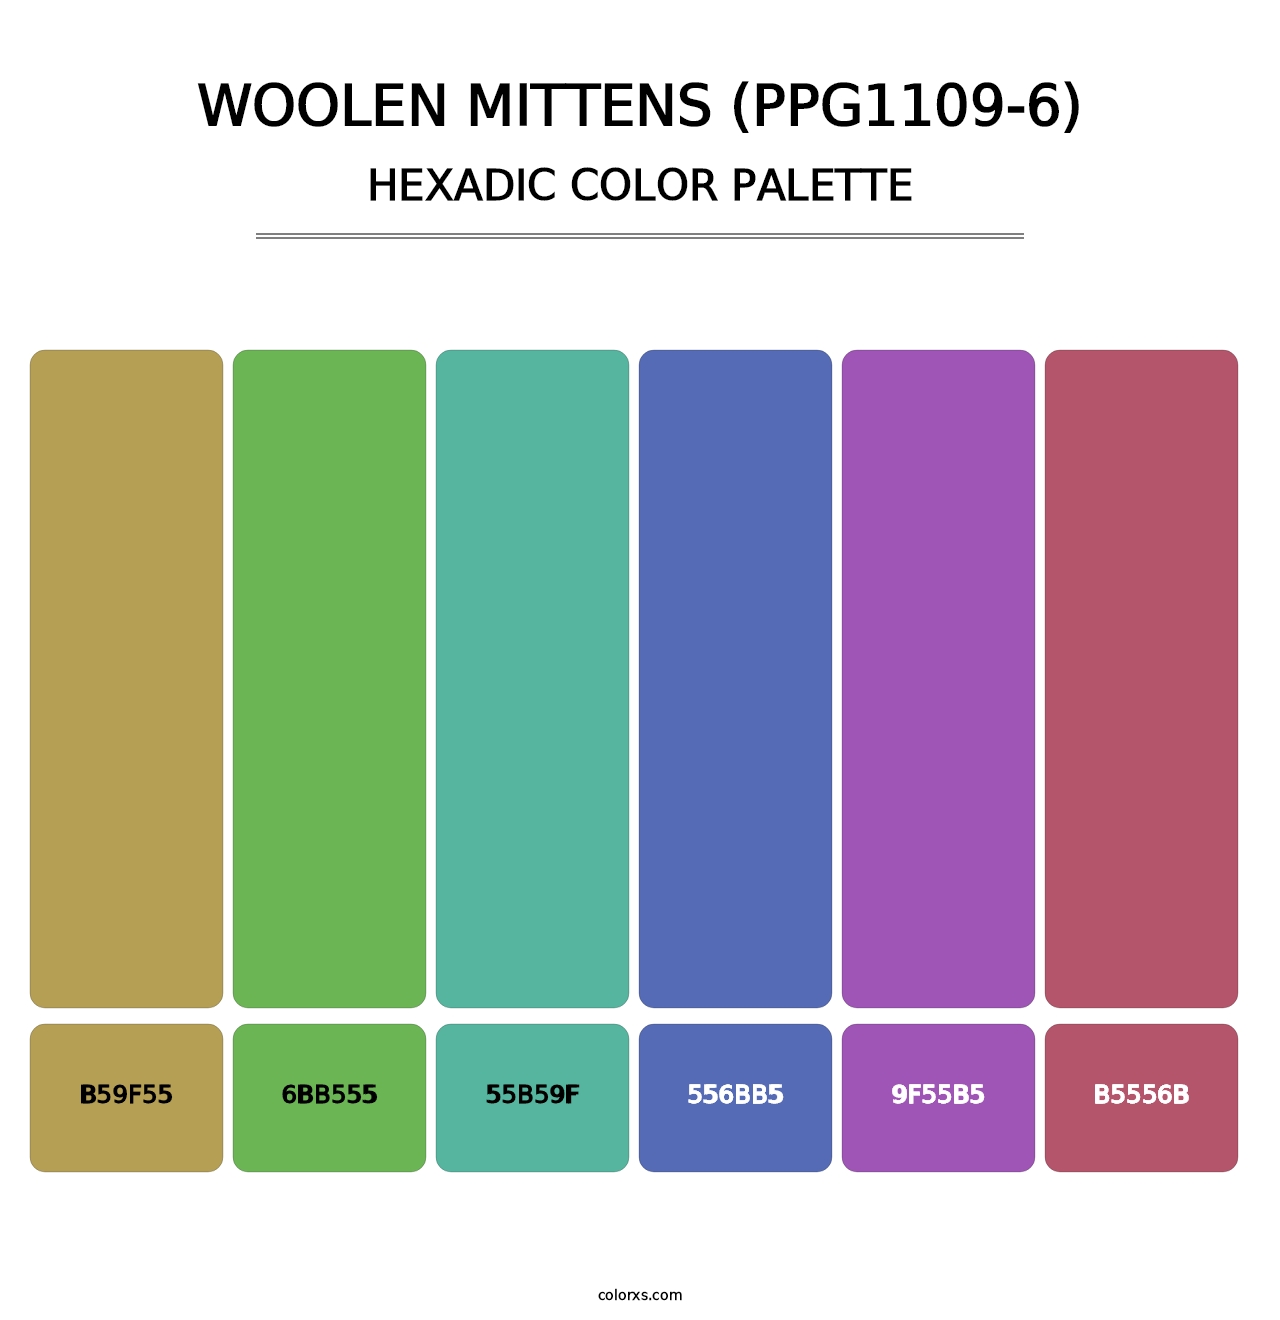 Woolen Mittens (PPG1109-6) - Hexadic Color Palette